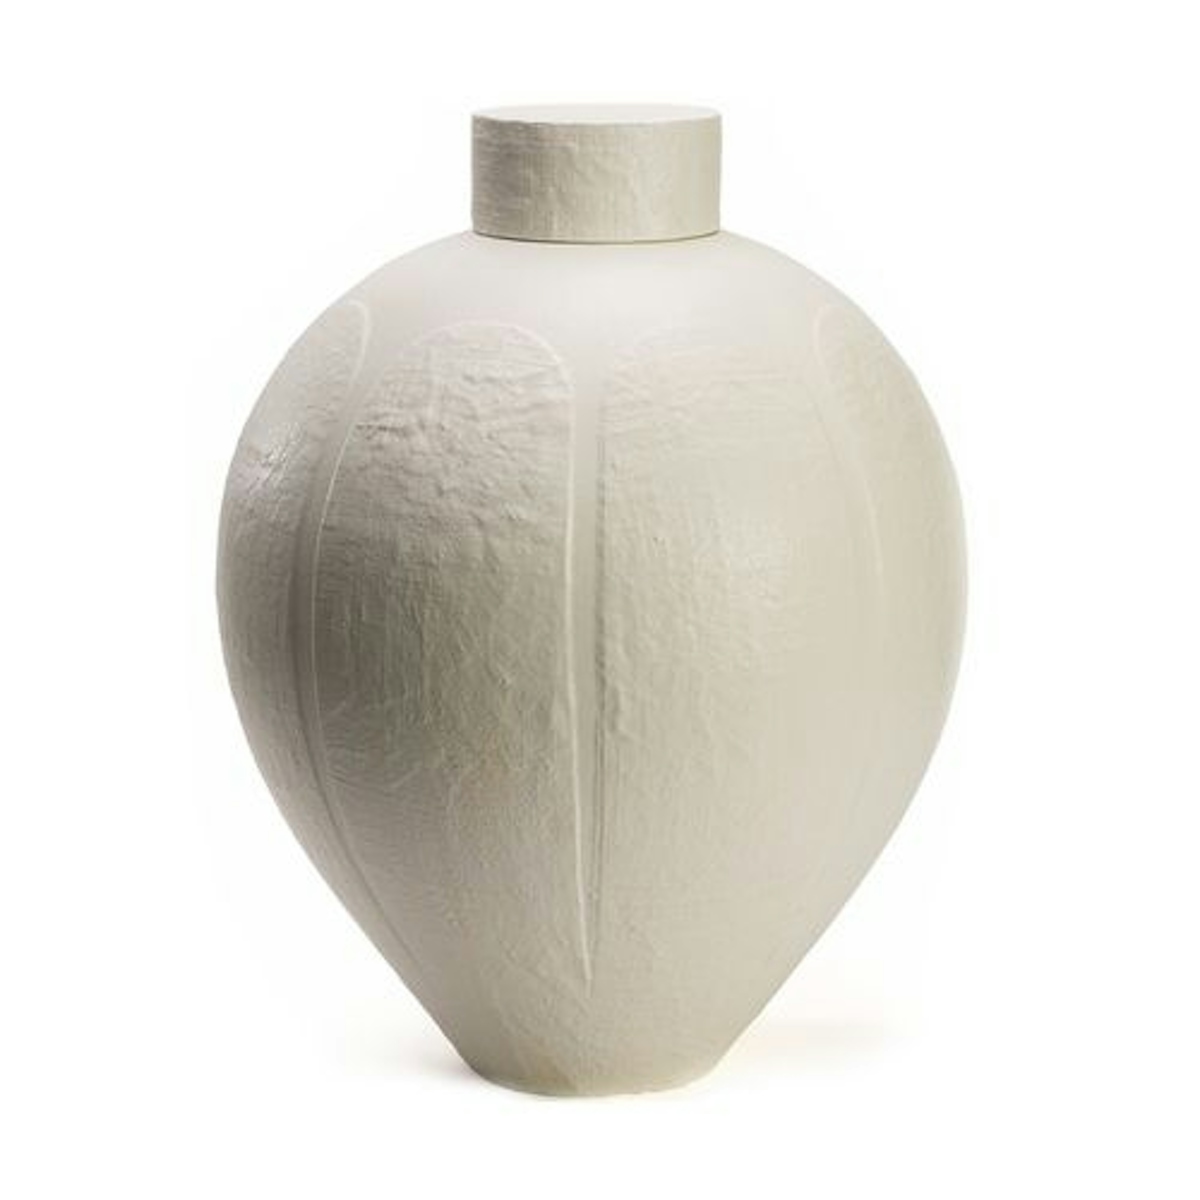 XL Linen Jar - 9 Best Decorative Vases To Buy For Your Home - LuxDeco.com